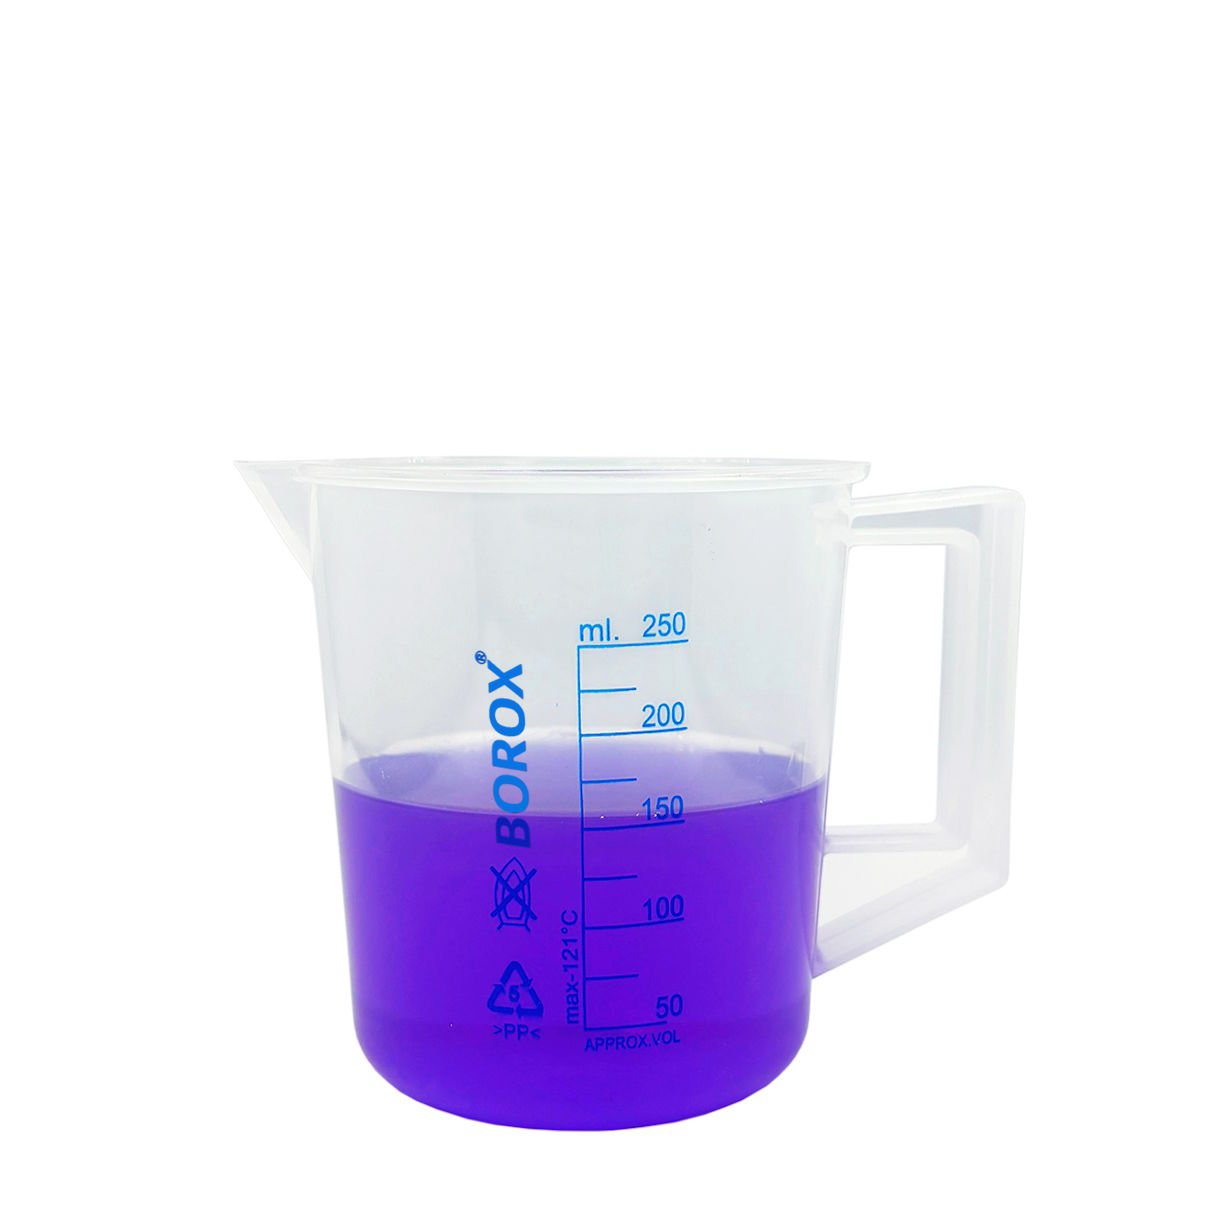 Borox Kulplu Plastik Beher 250 ml - Ölçü Kabı - Mavi Skala